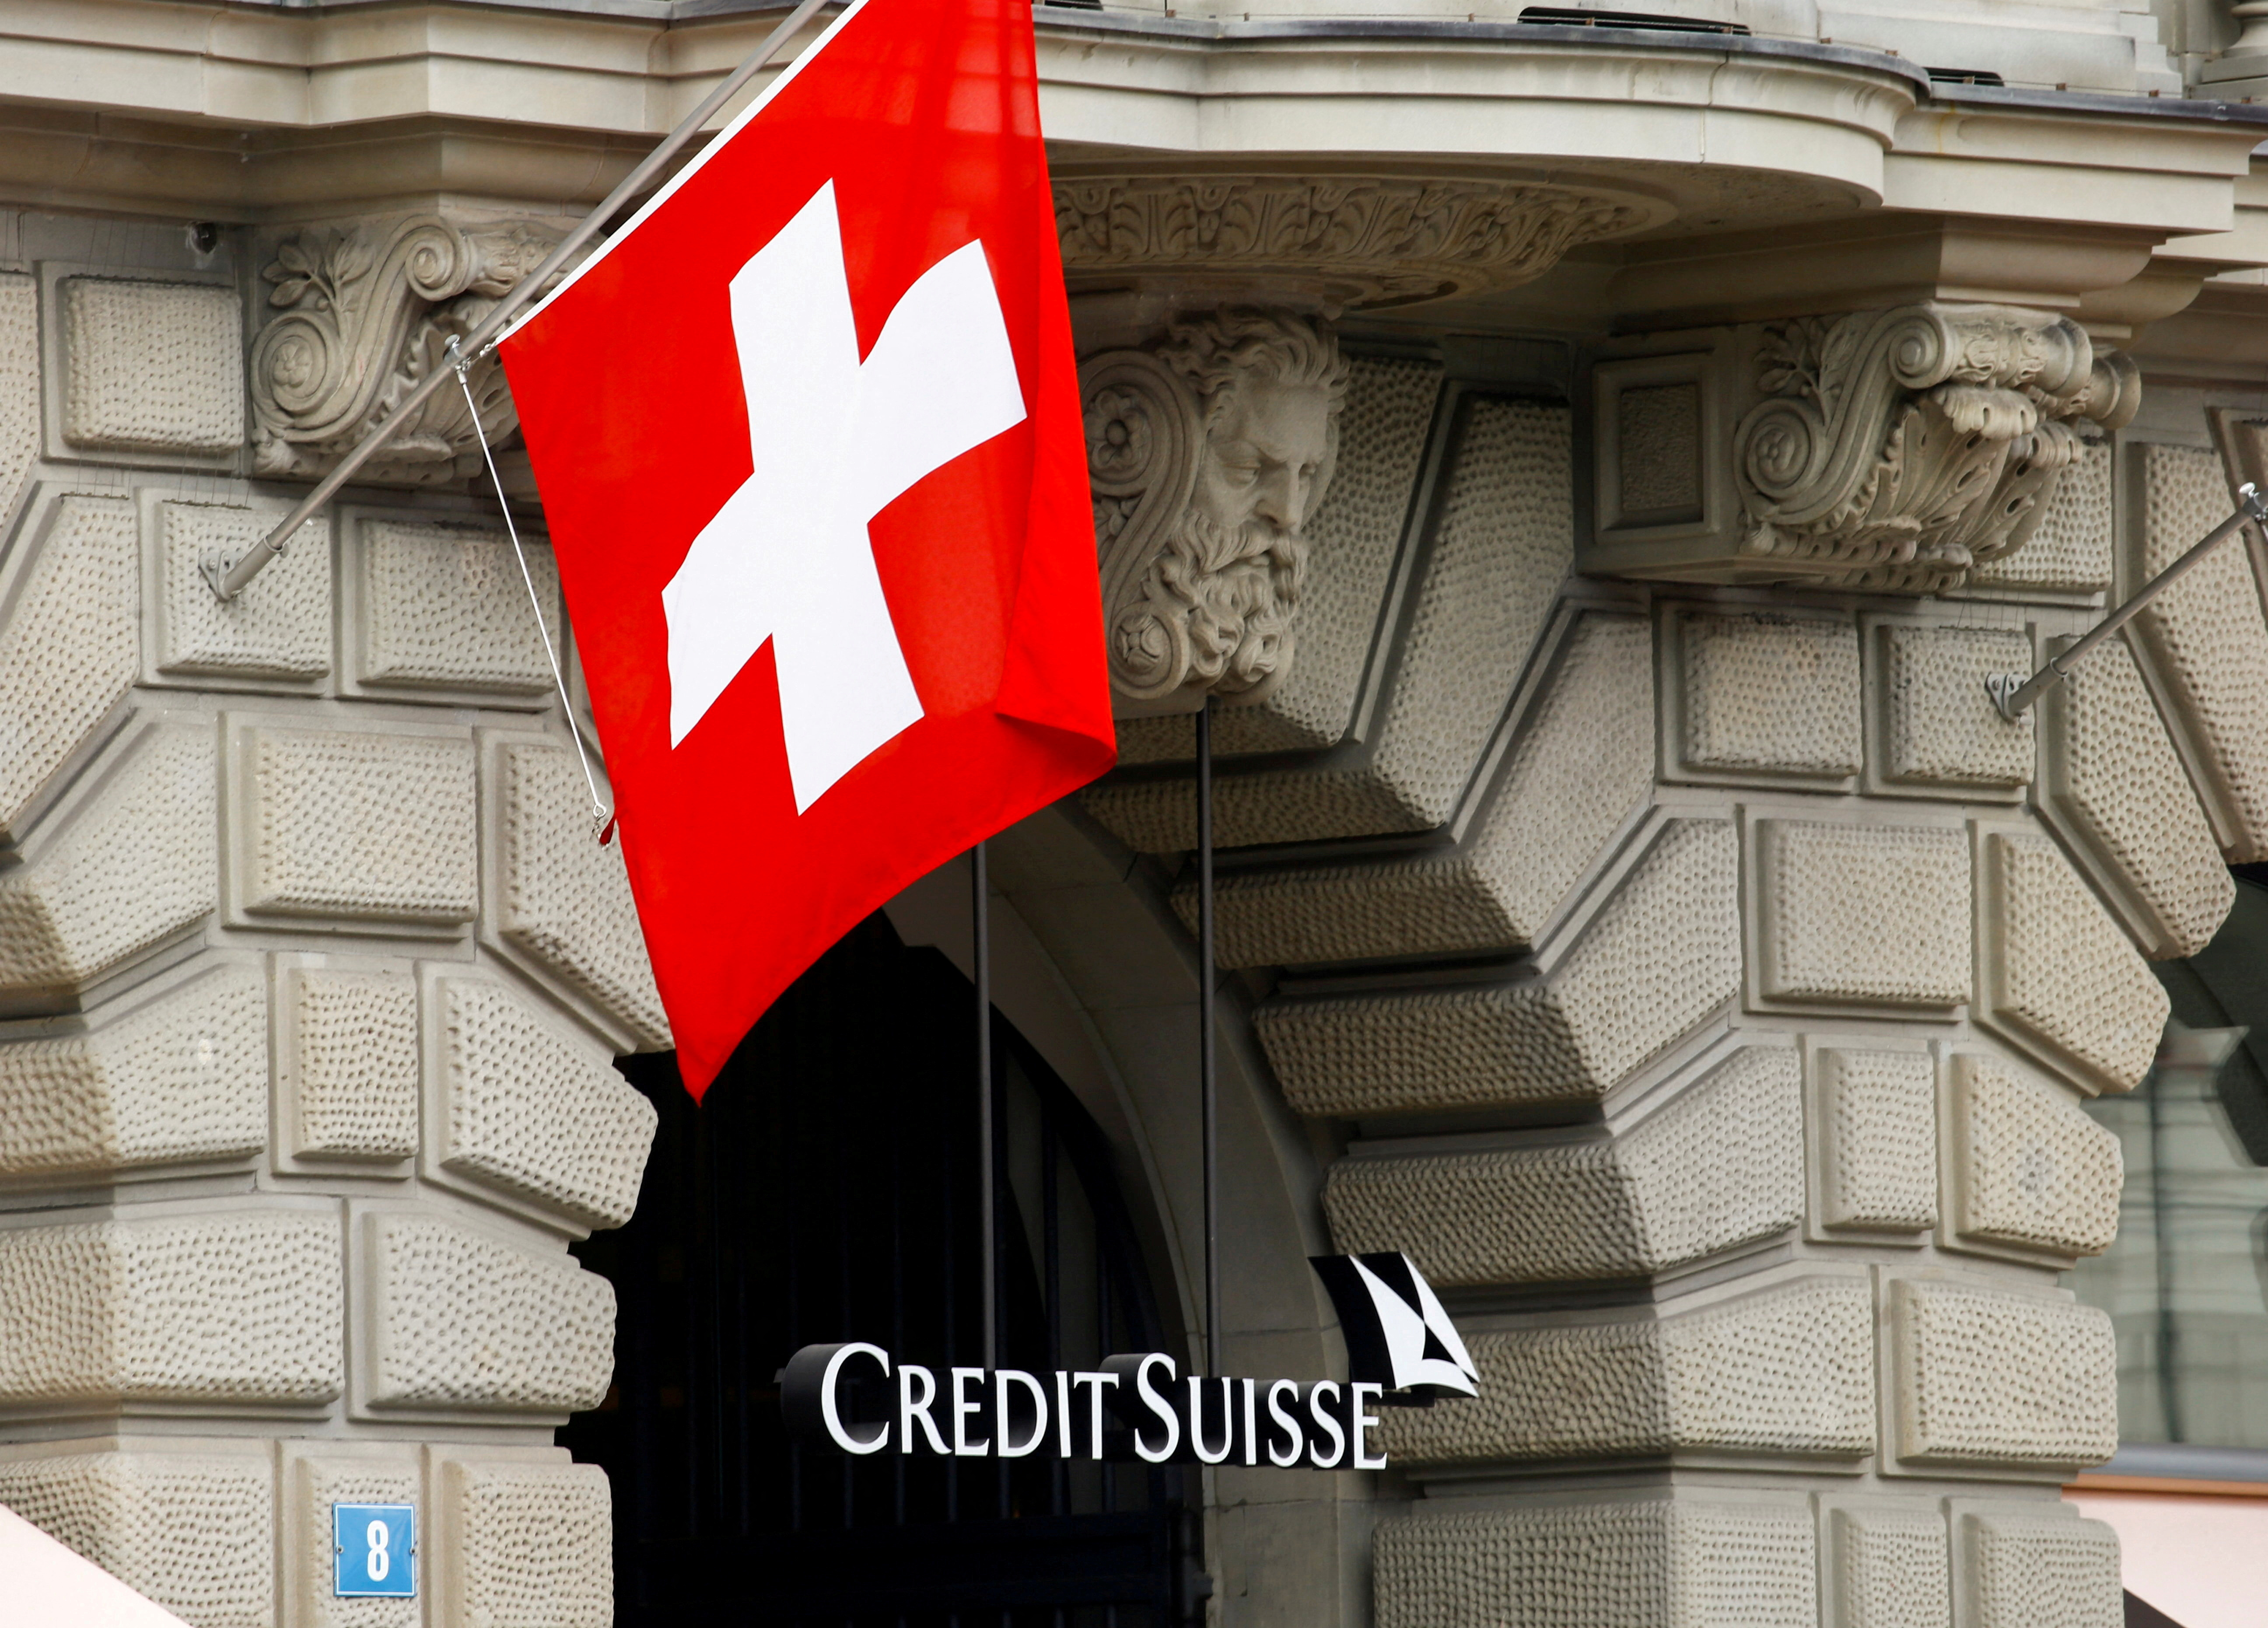 Switzerland's national flag flies above the logo of Swiss bank Credit Suisse in Zurich